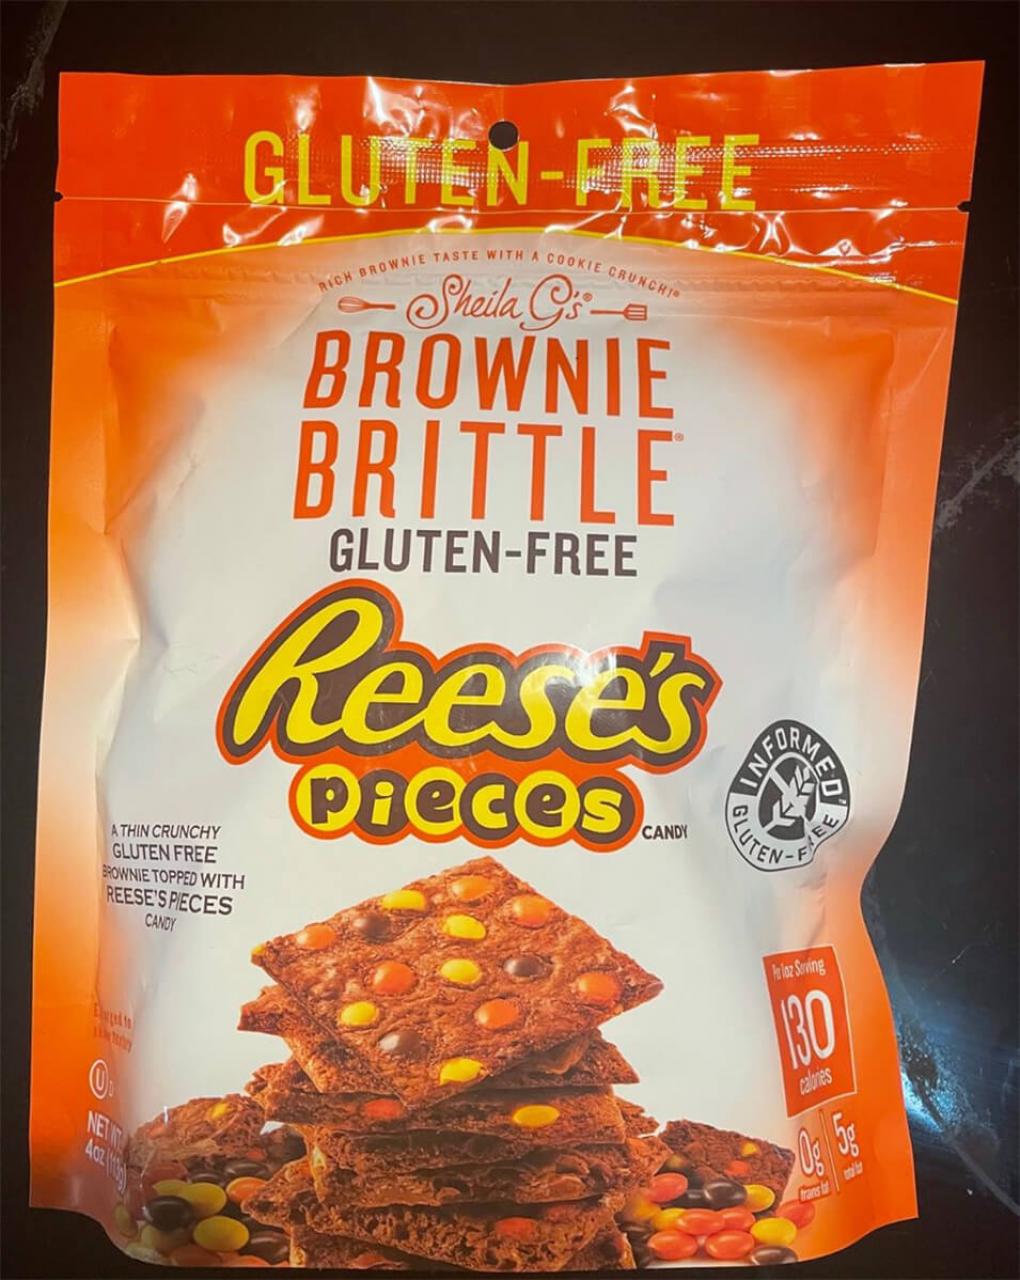 Second Nature Brands recalls Gluten Free Reese’s Pieces Brownie Brittle